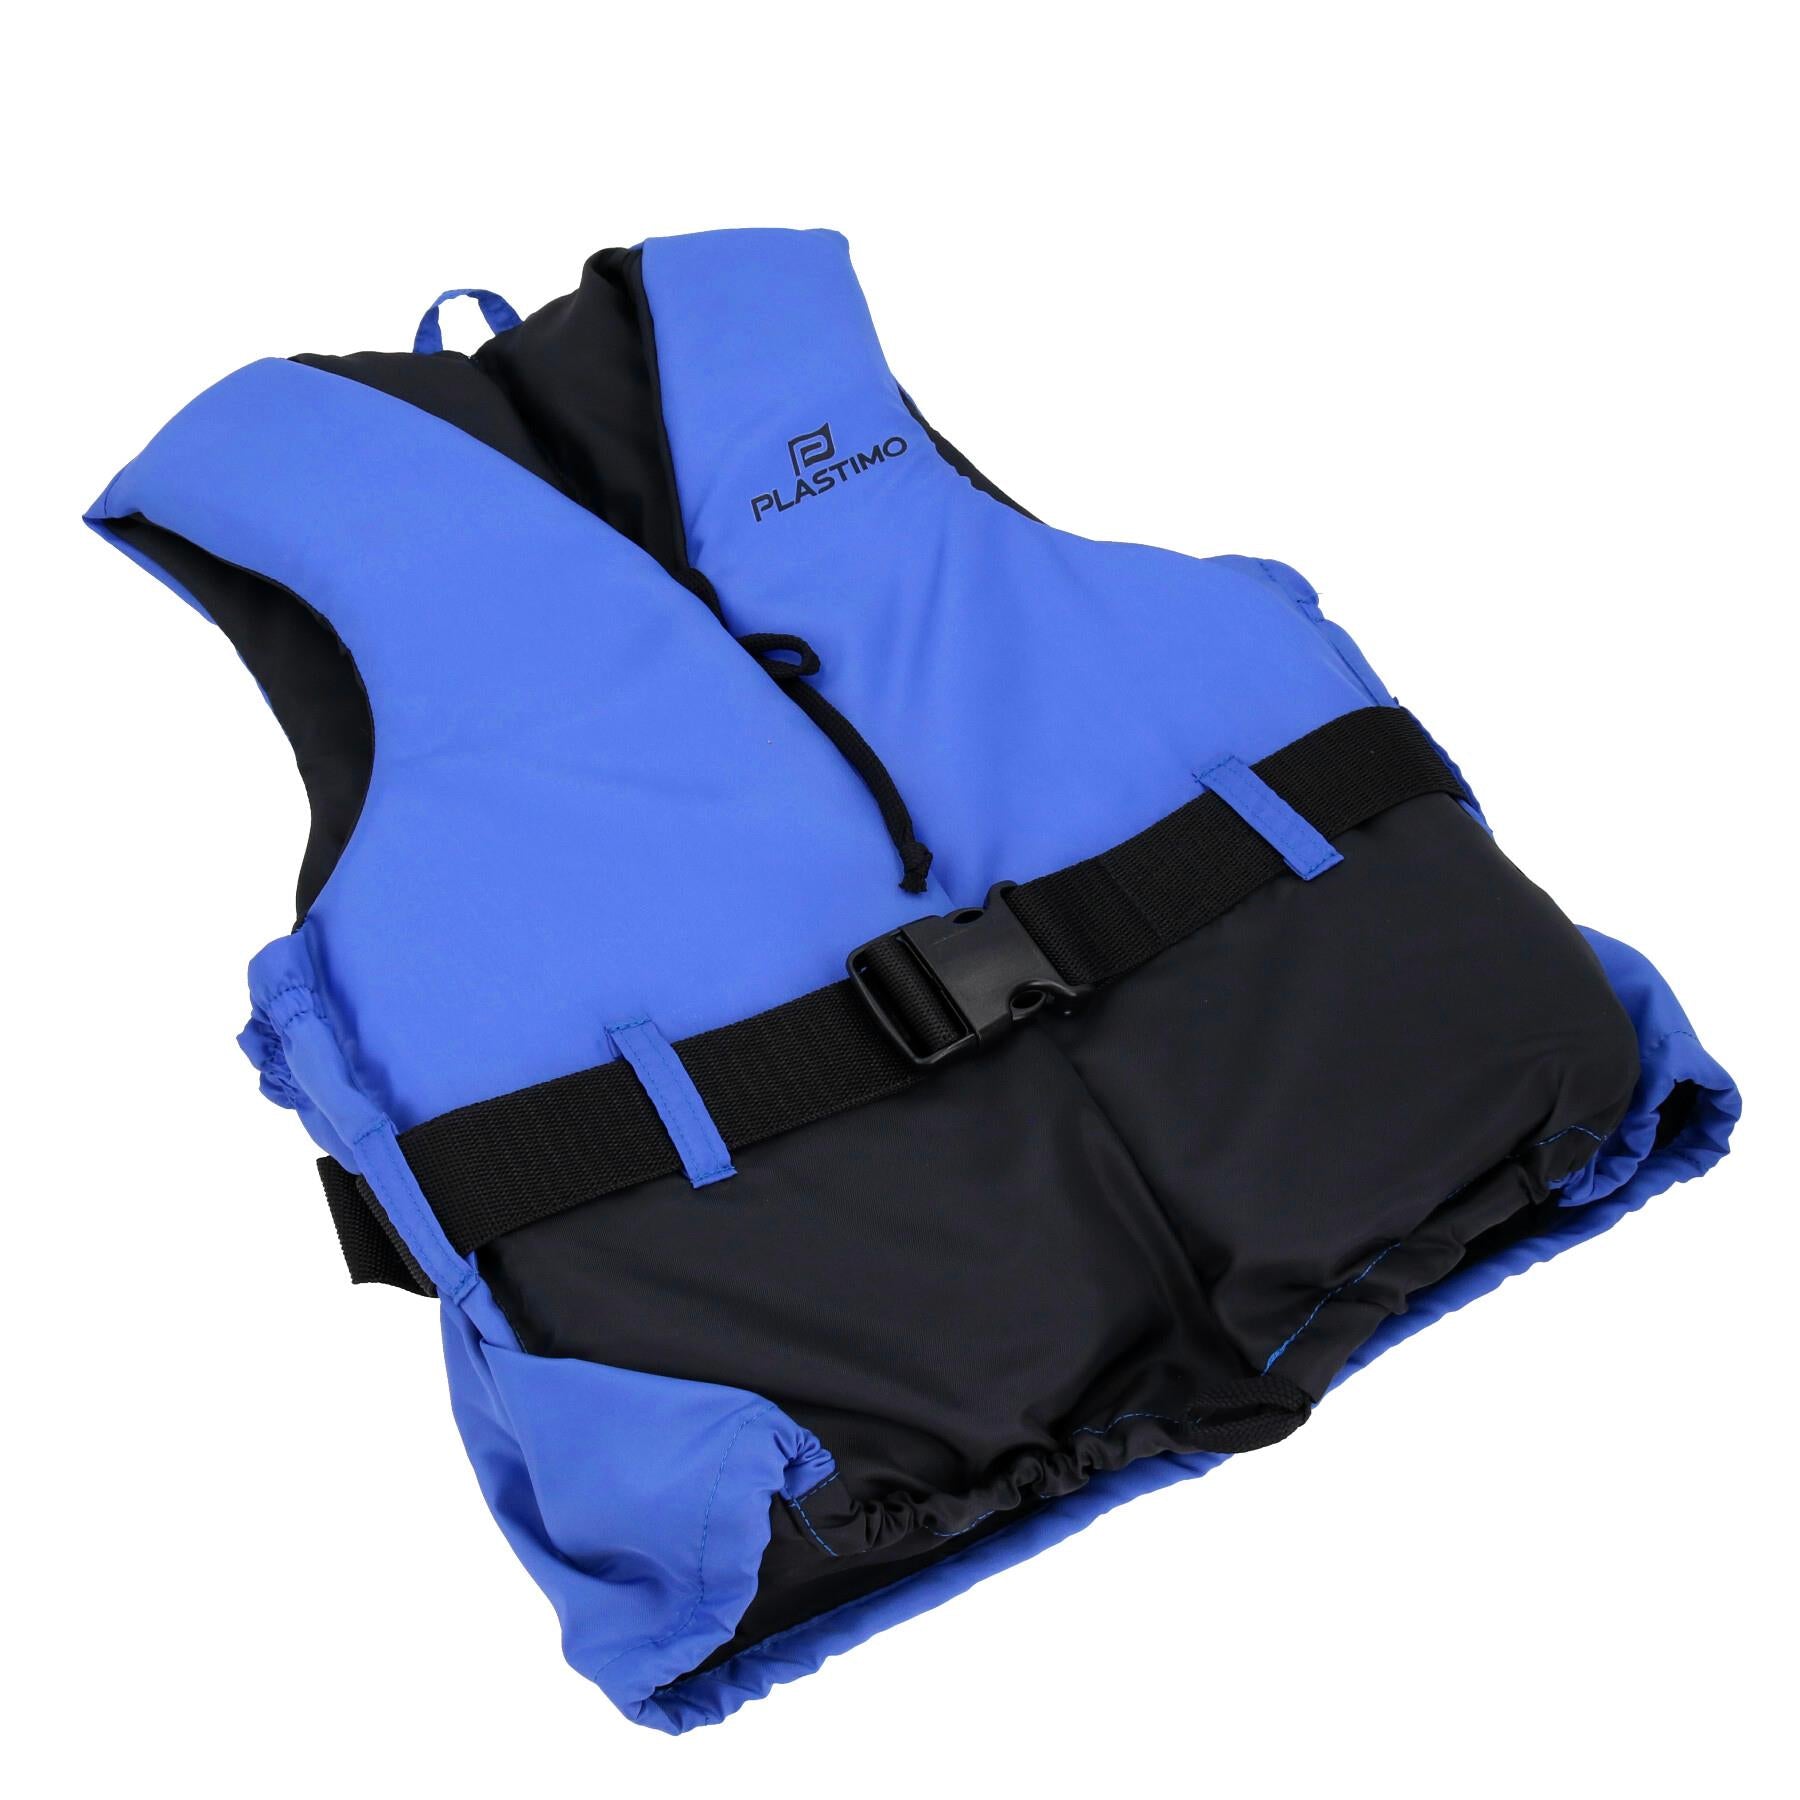 Adult Buoyancy Aid Plastimo Olympia 50N Personal Floatation Jacket Device